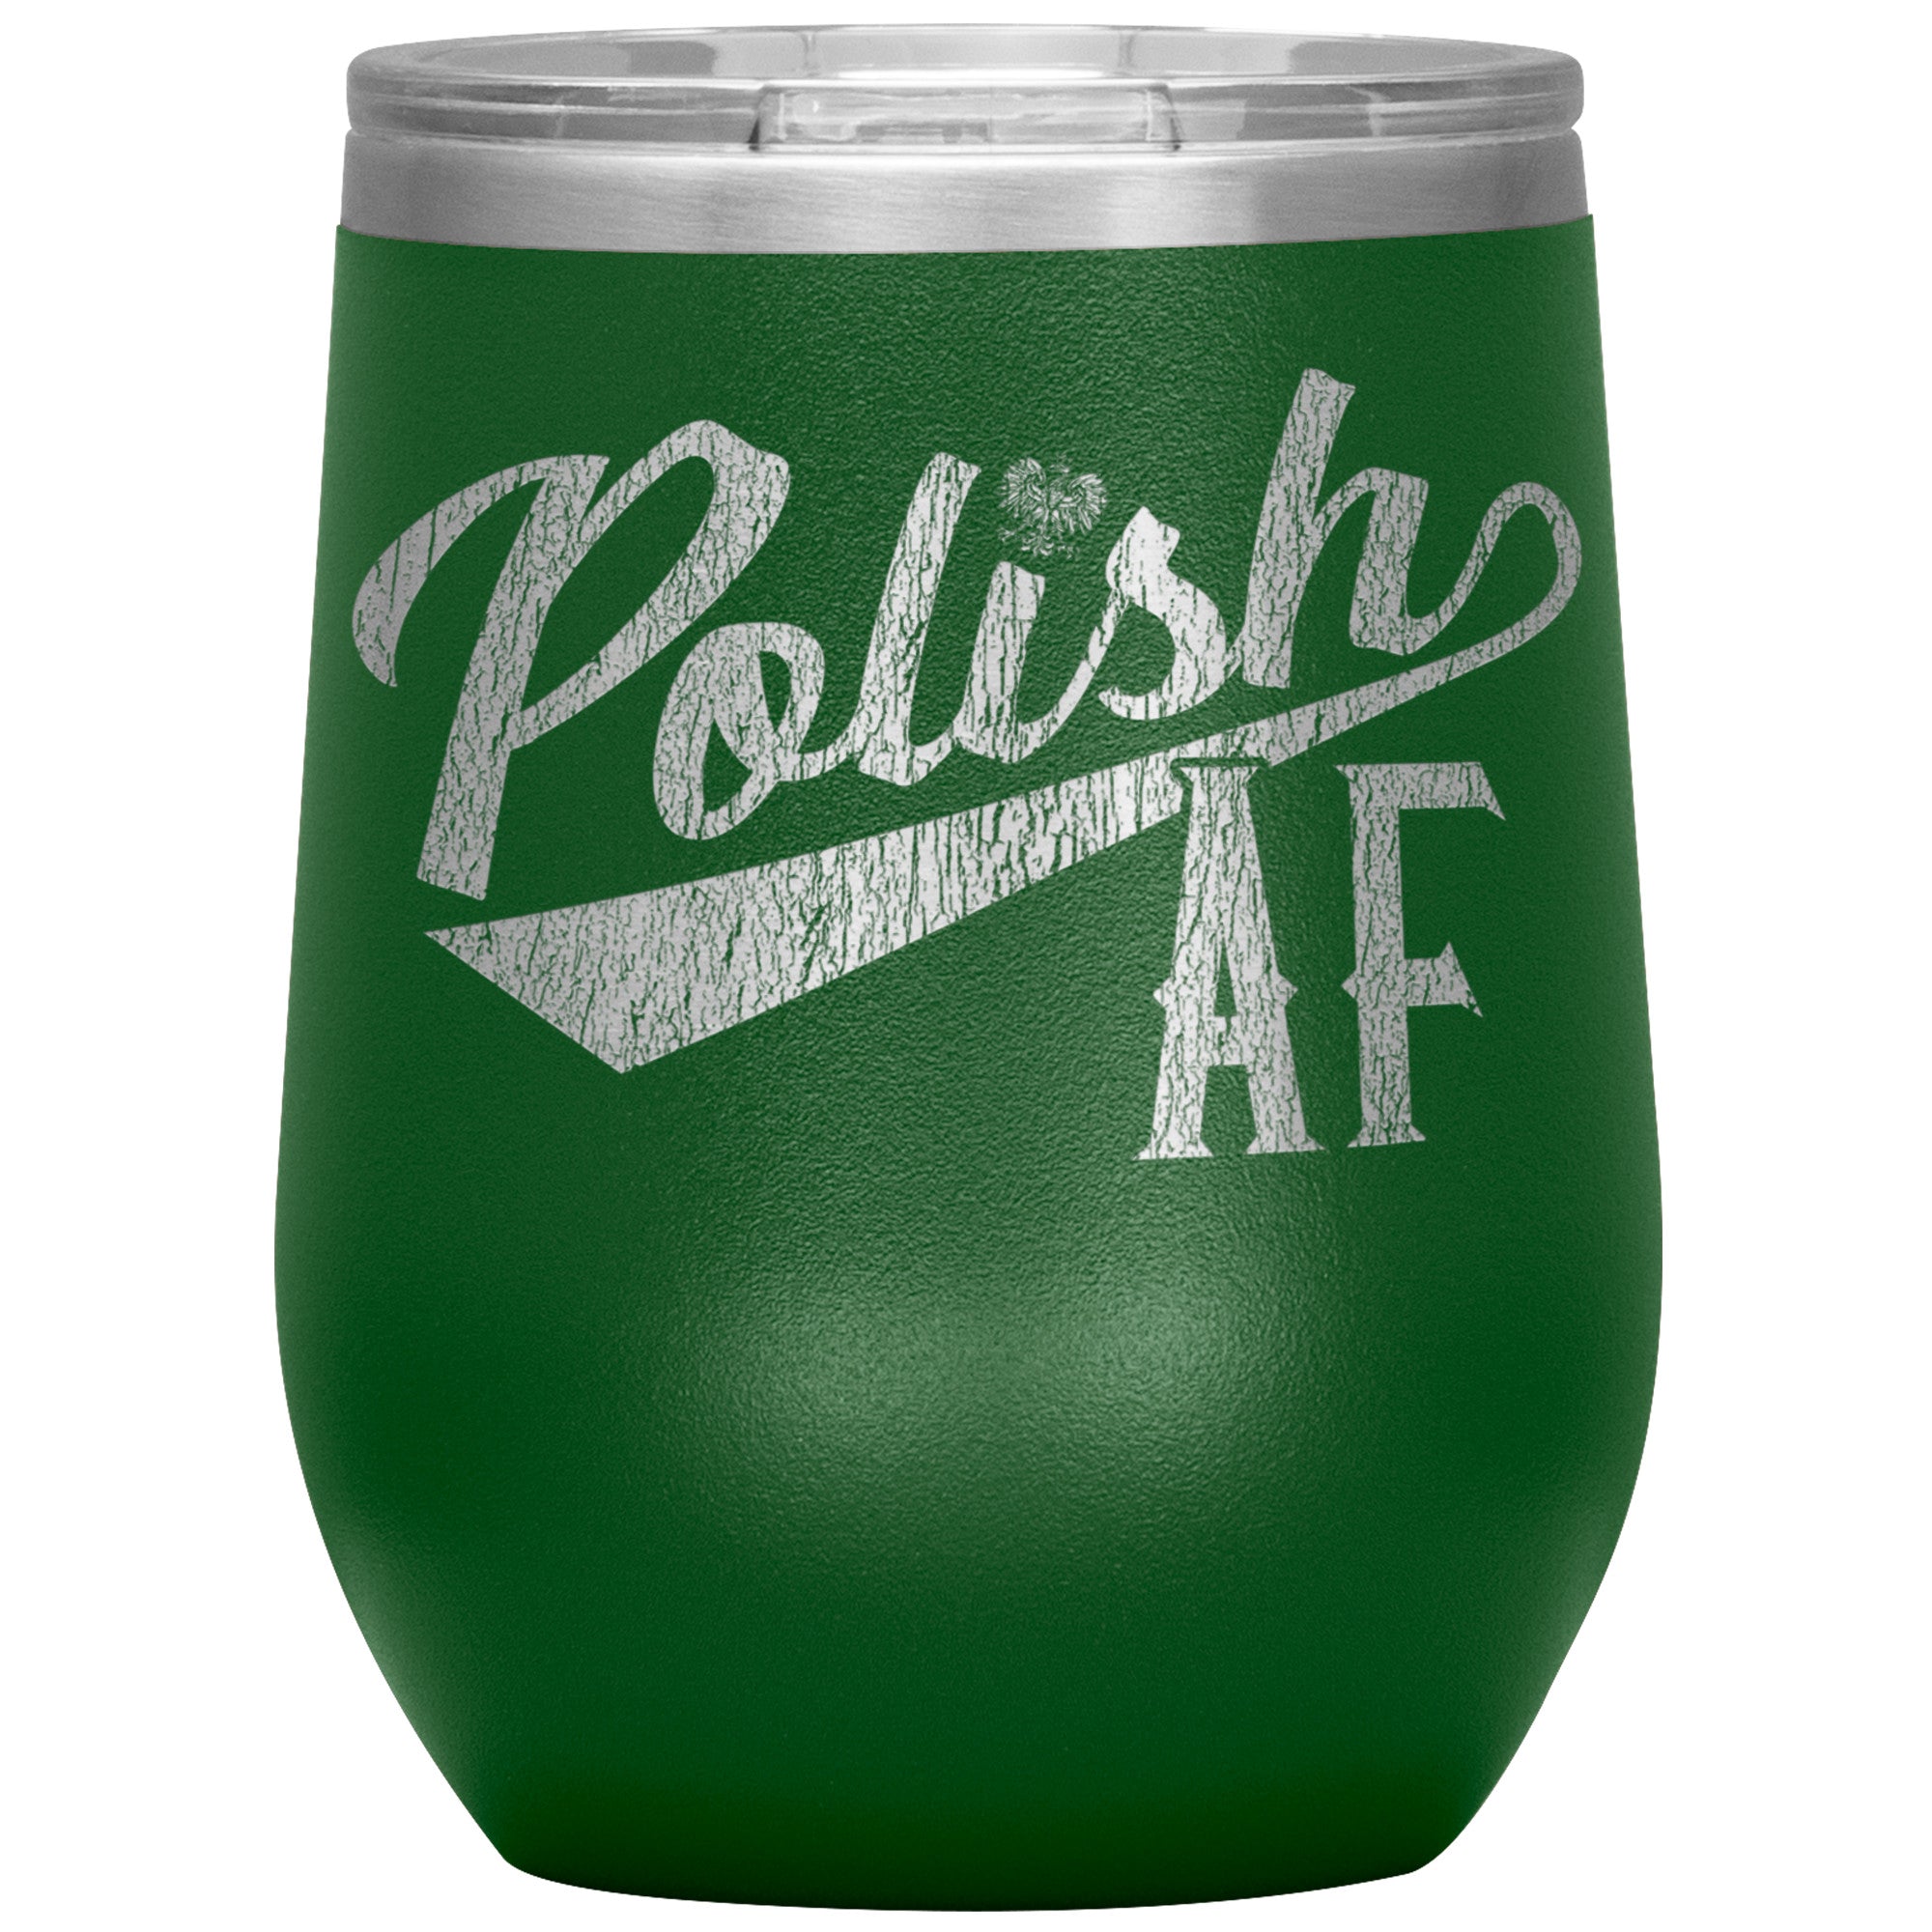 Polish AF Insulated Wine Tumbler Tumblers teelaunch Green  